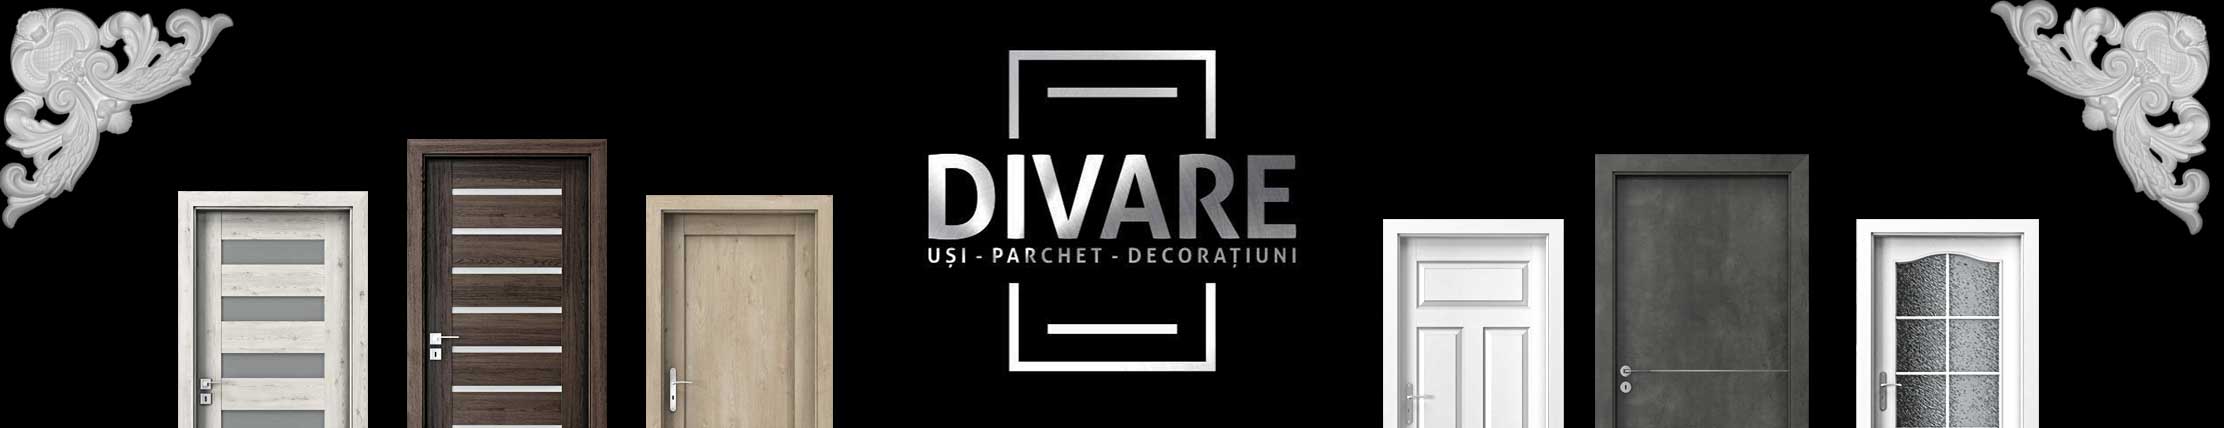 DiVARE Concept  | USI. PARCHET. DECORATIUNI | Showroom CRAIOVA & Magazin Online